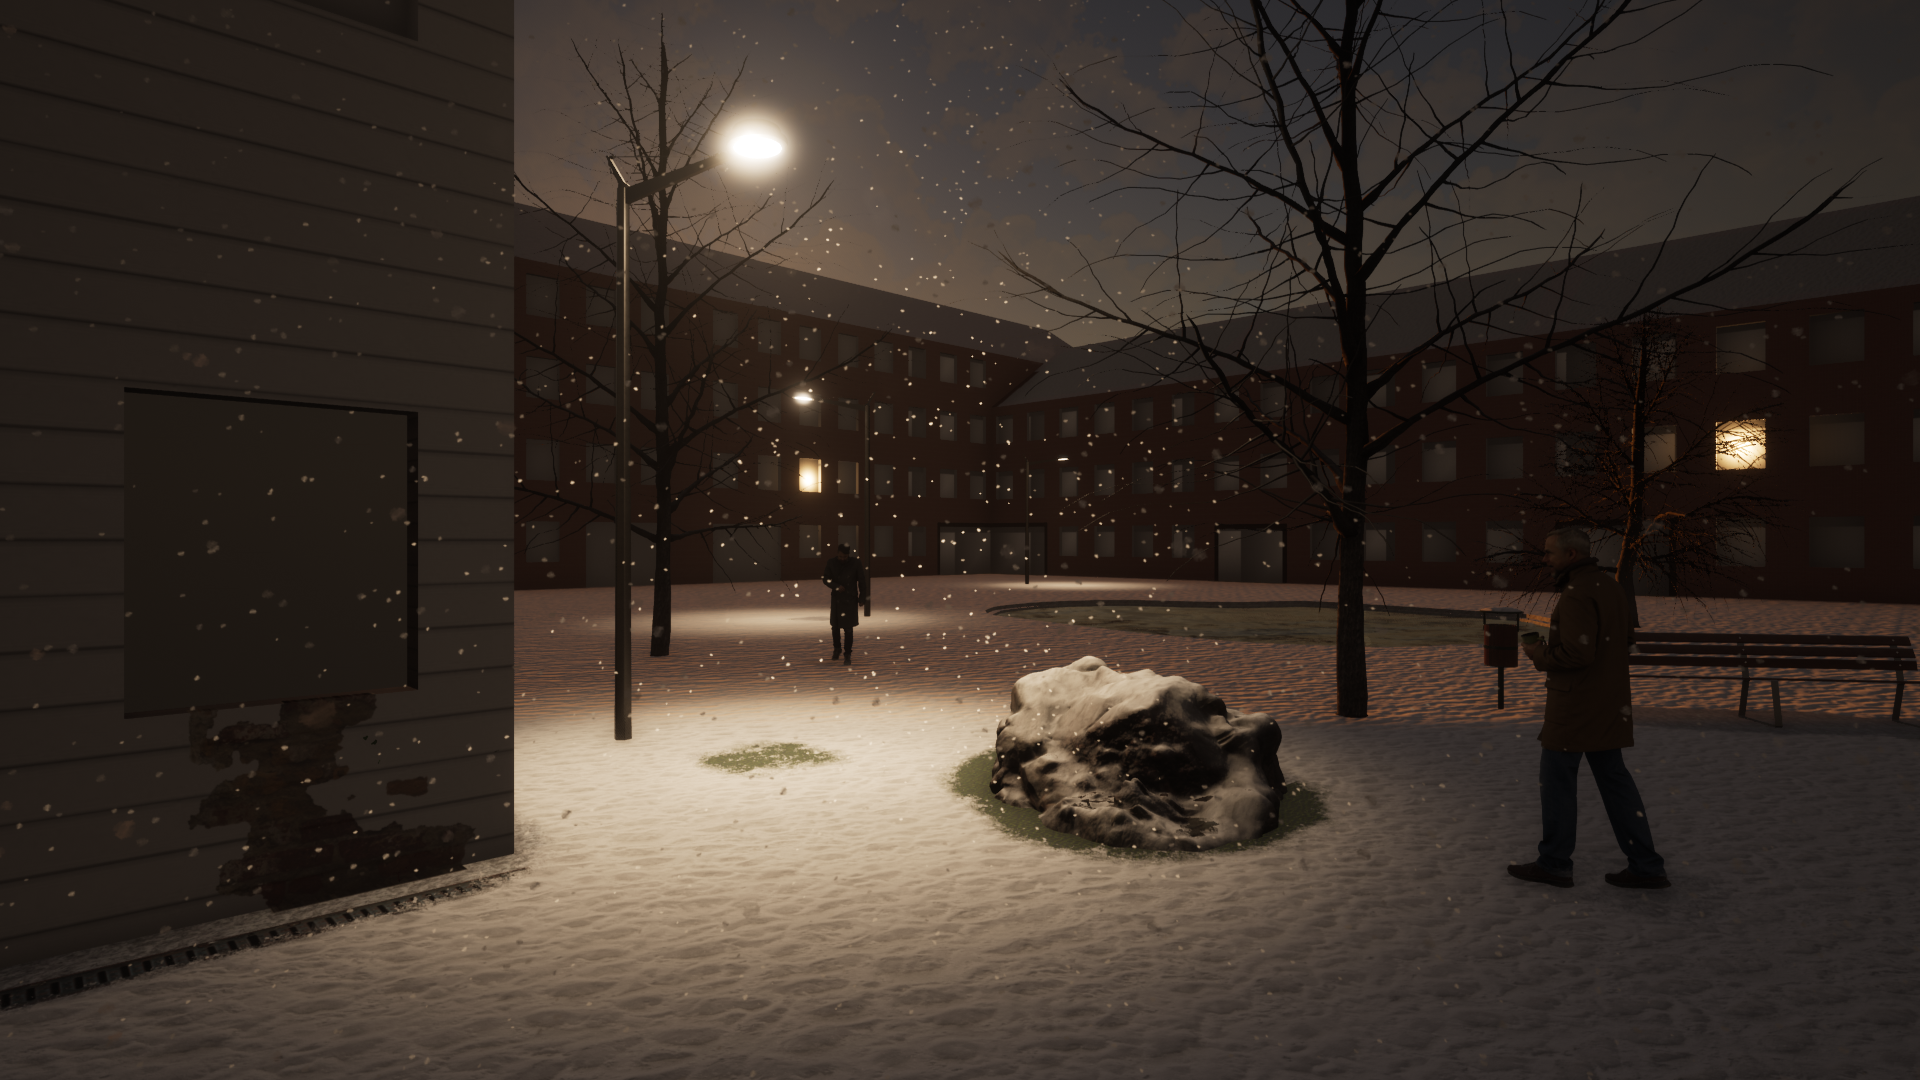 Courtyard in winter by night